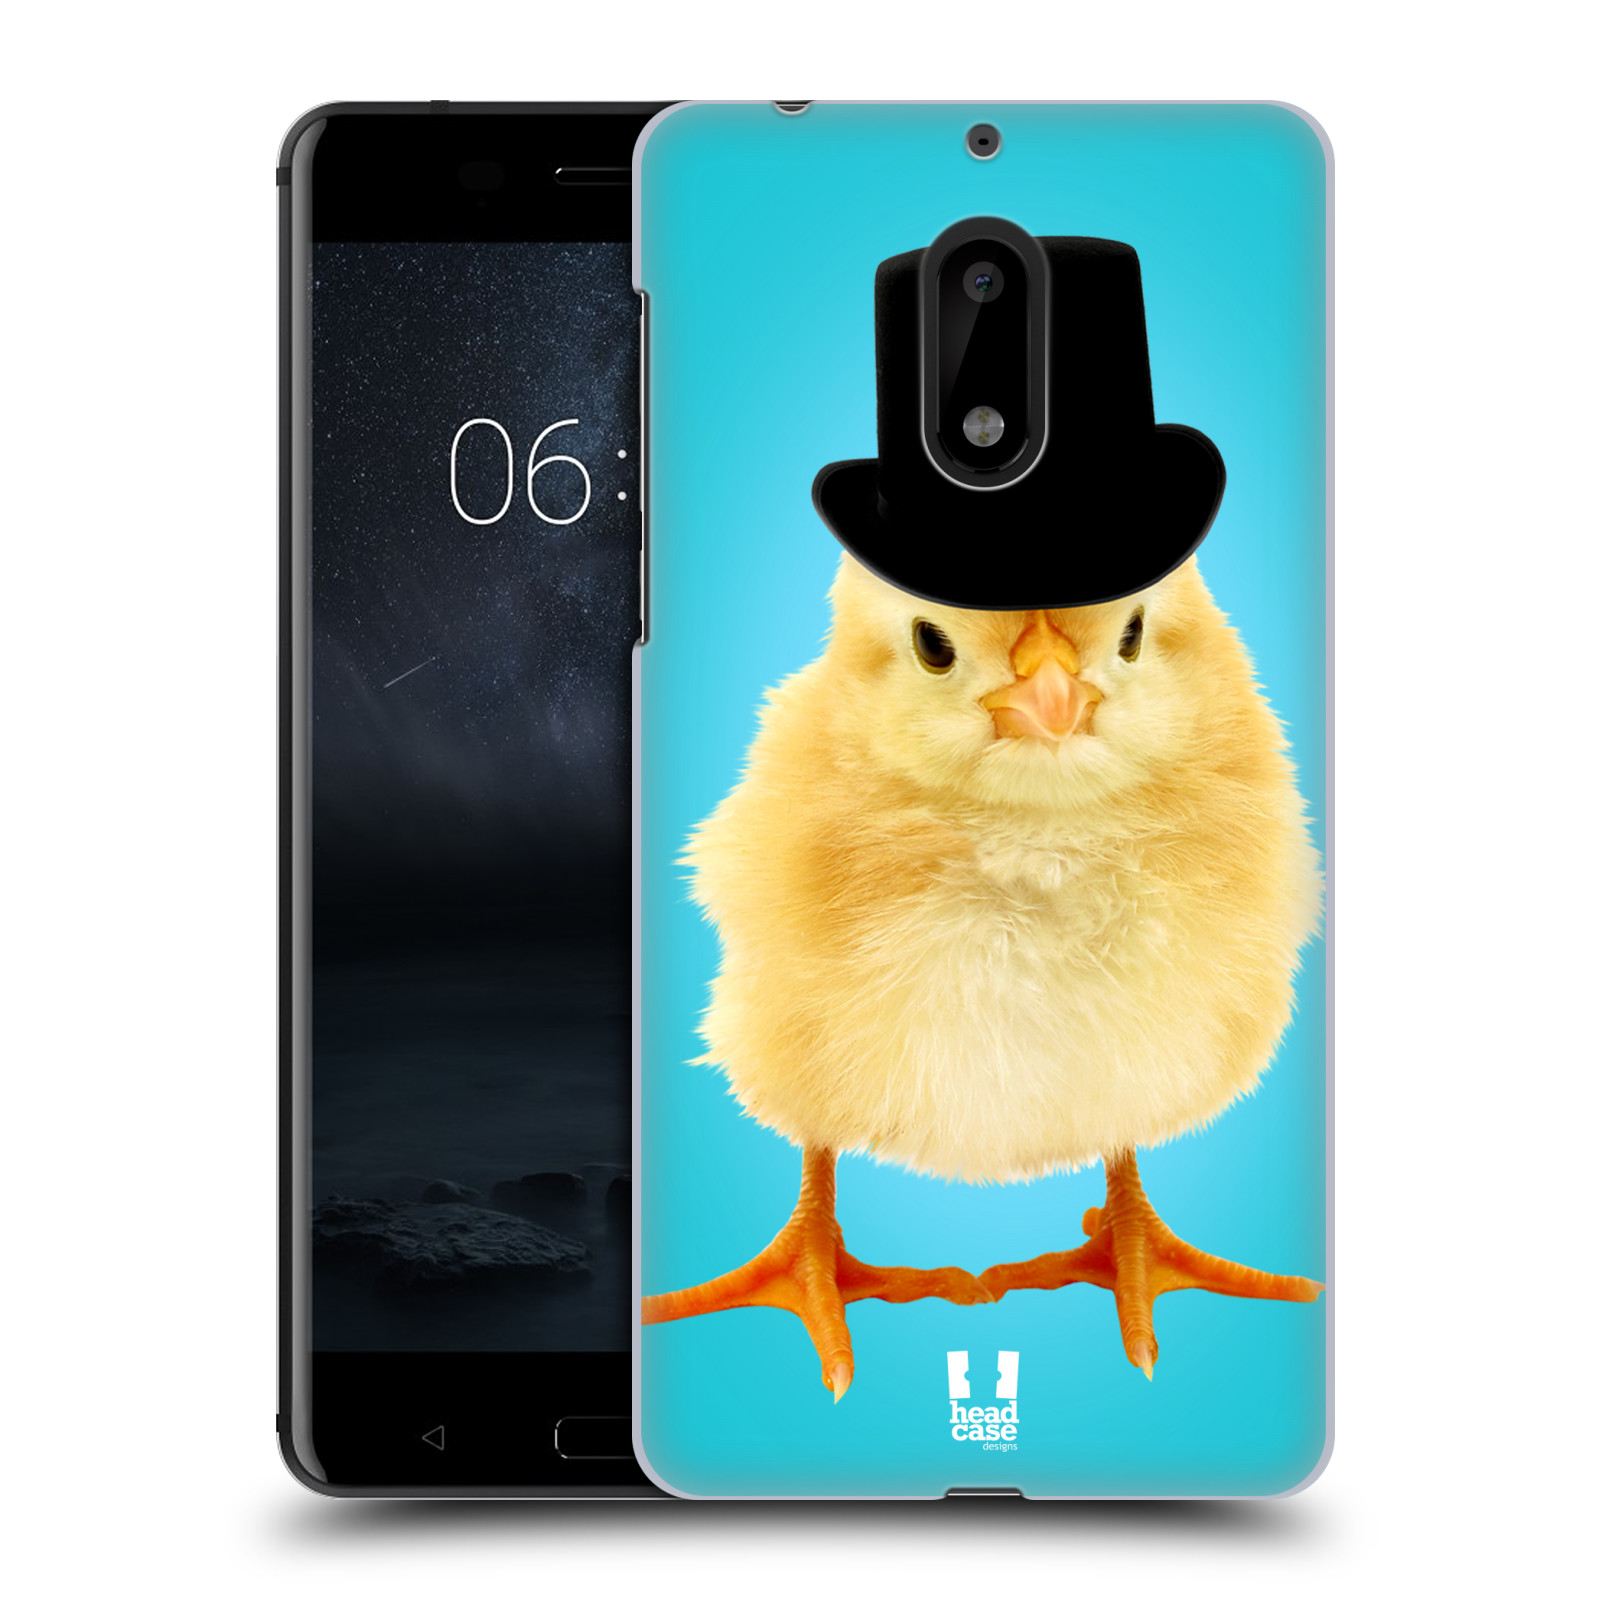 HEAD CASE plastový obal na mobil Nokia 6 vzor Legrační zvířátka Mr. kuřátko